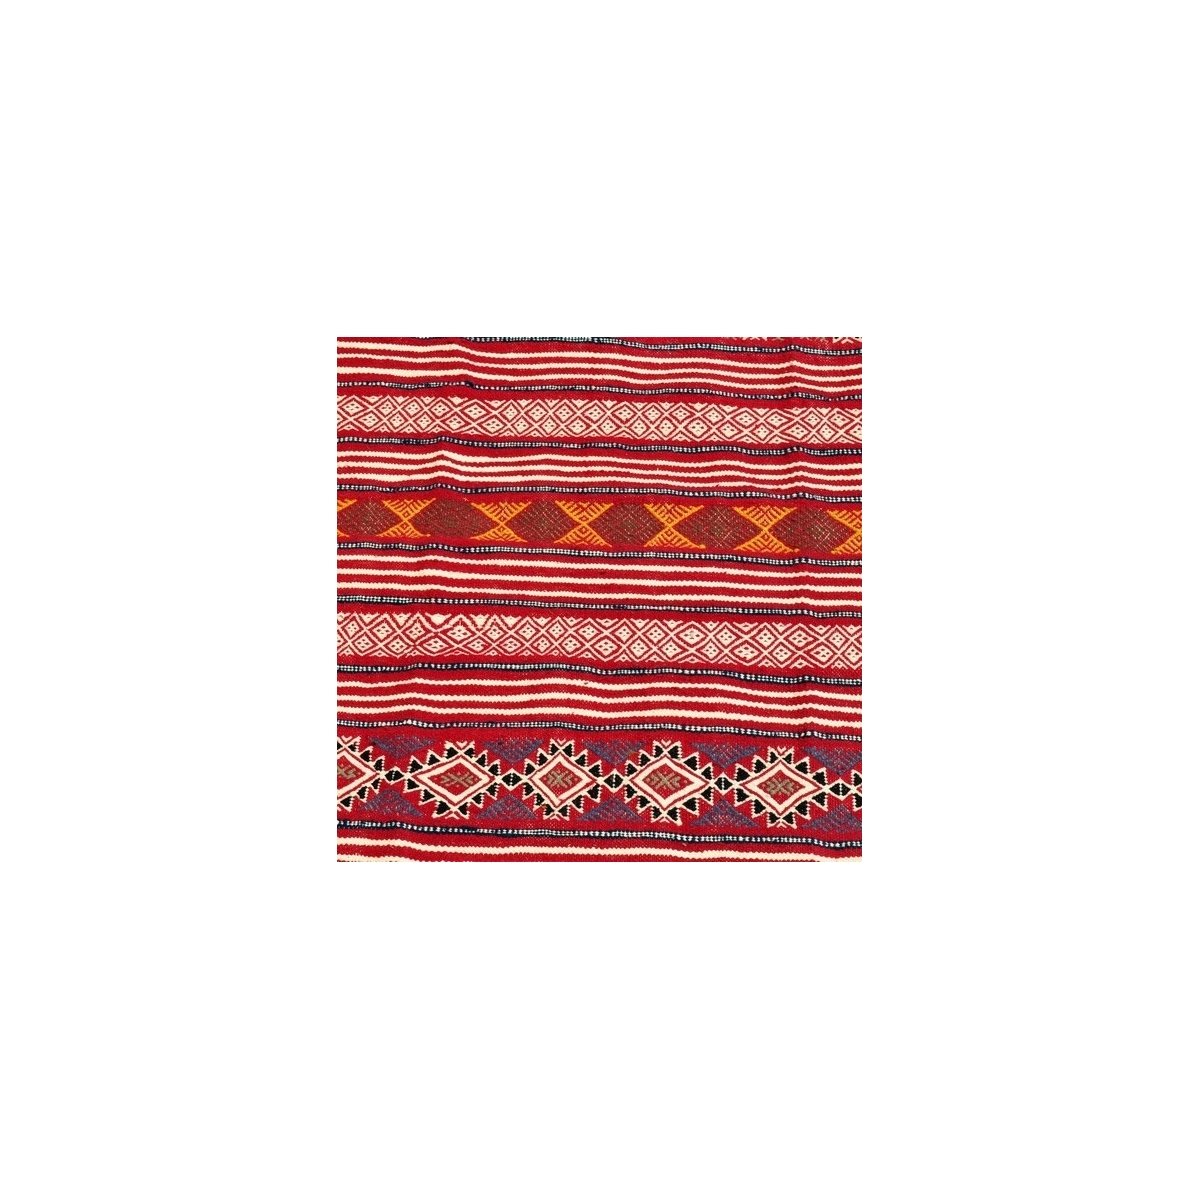 Berber tapijt Groot Tapijt Kilim Mahres 110x200 Rood (Handgeweven, Wol, Tunesië) Tunesisch kilimdeken, Marokkaanse stijl. Rechth